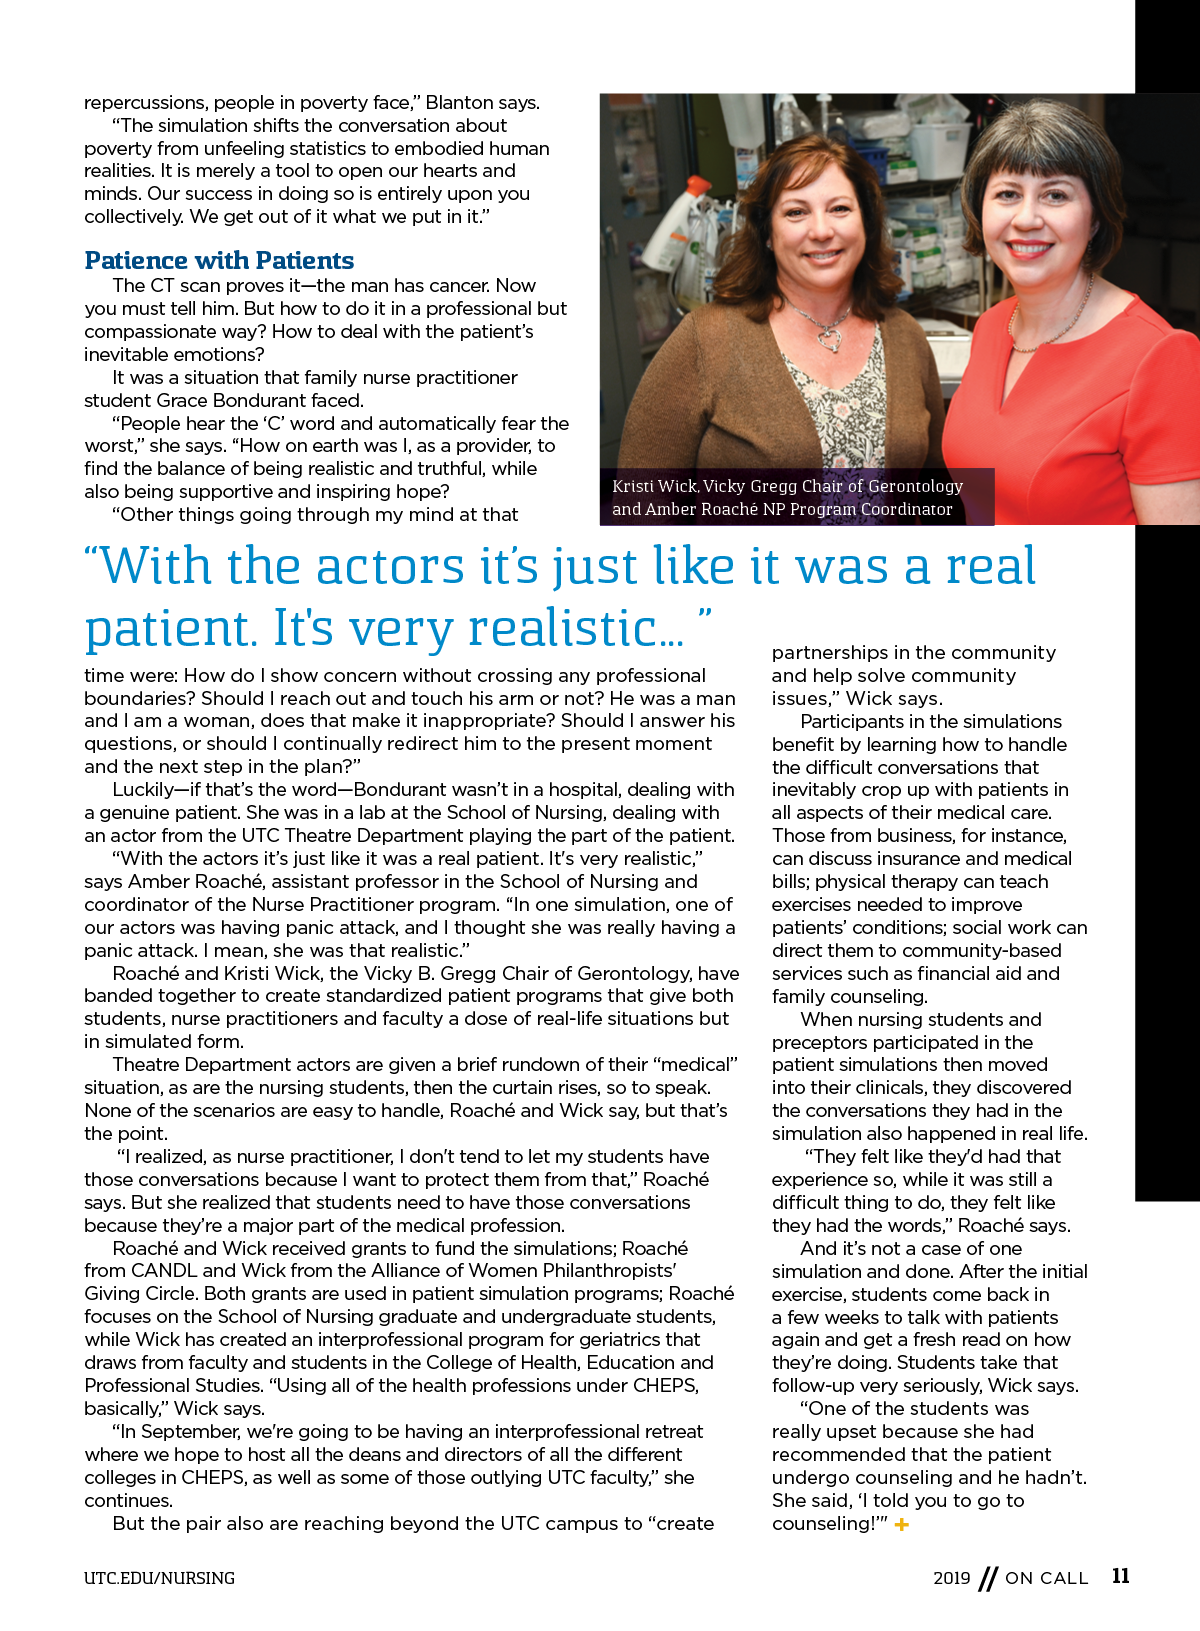 UTC Nursing On Call Magazine; text equivalent available at utc.edu/nursing/magazine